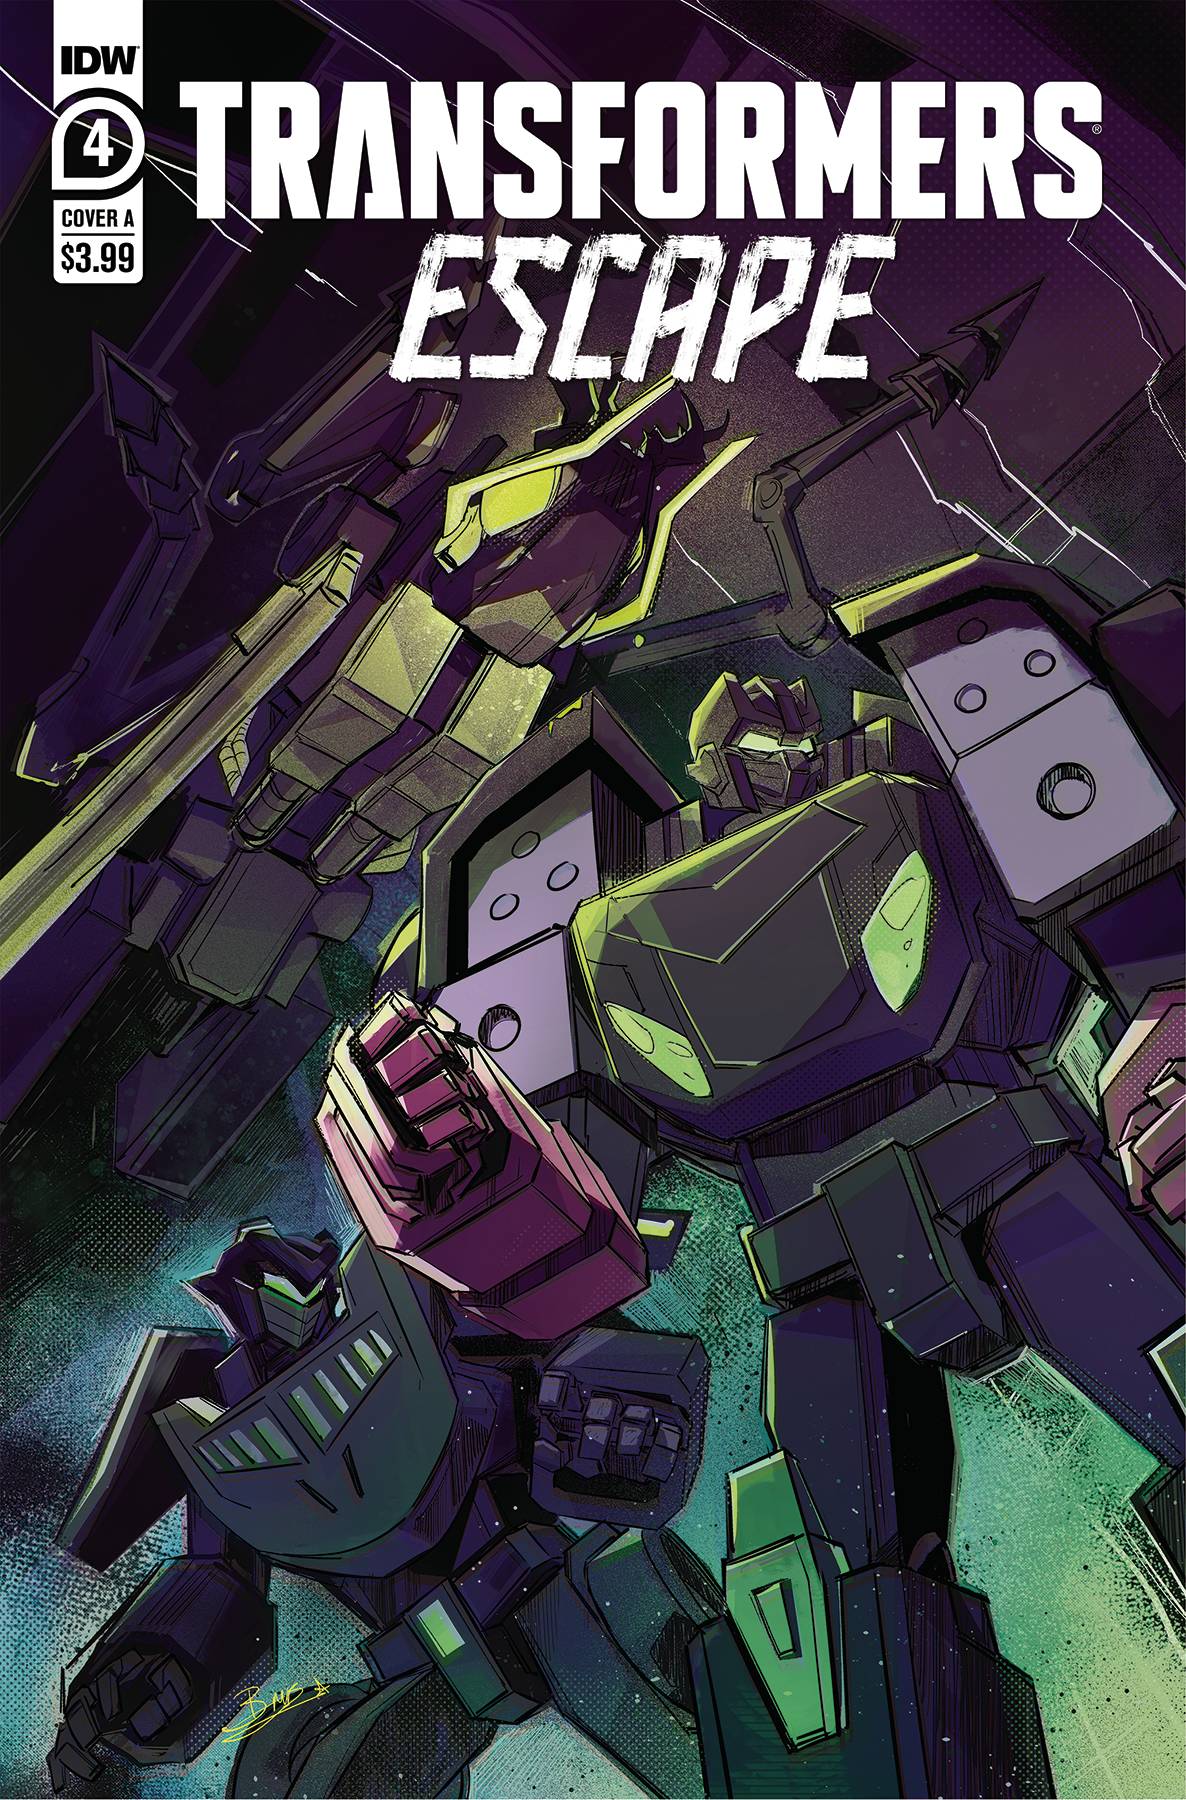 Transformers Escape Vol. 1 #4